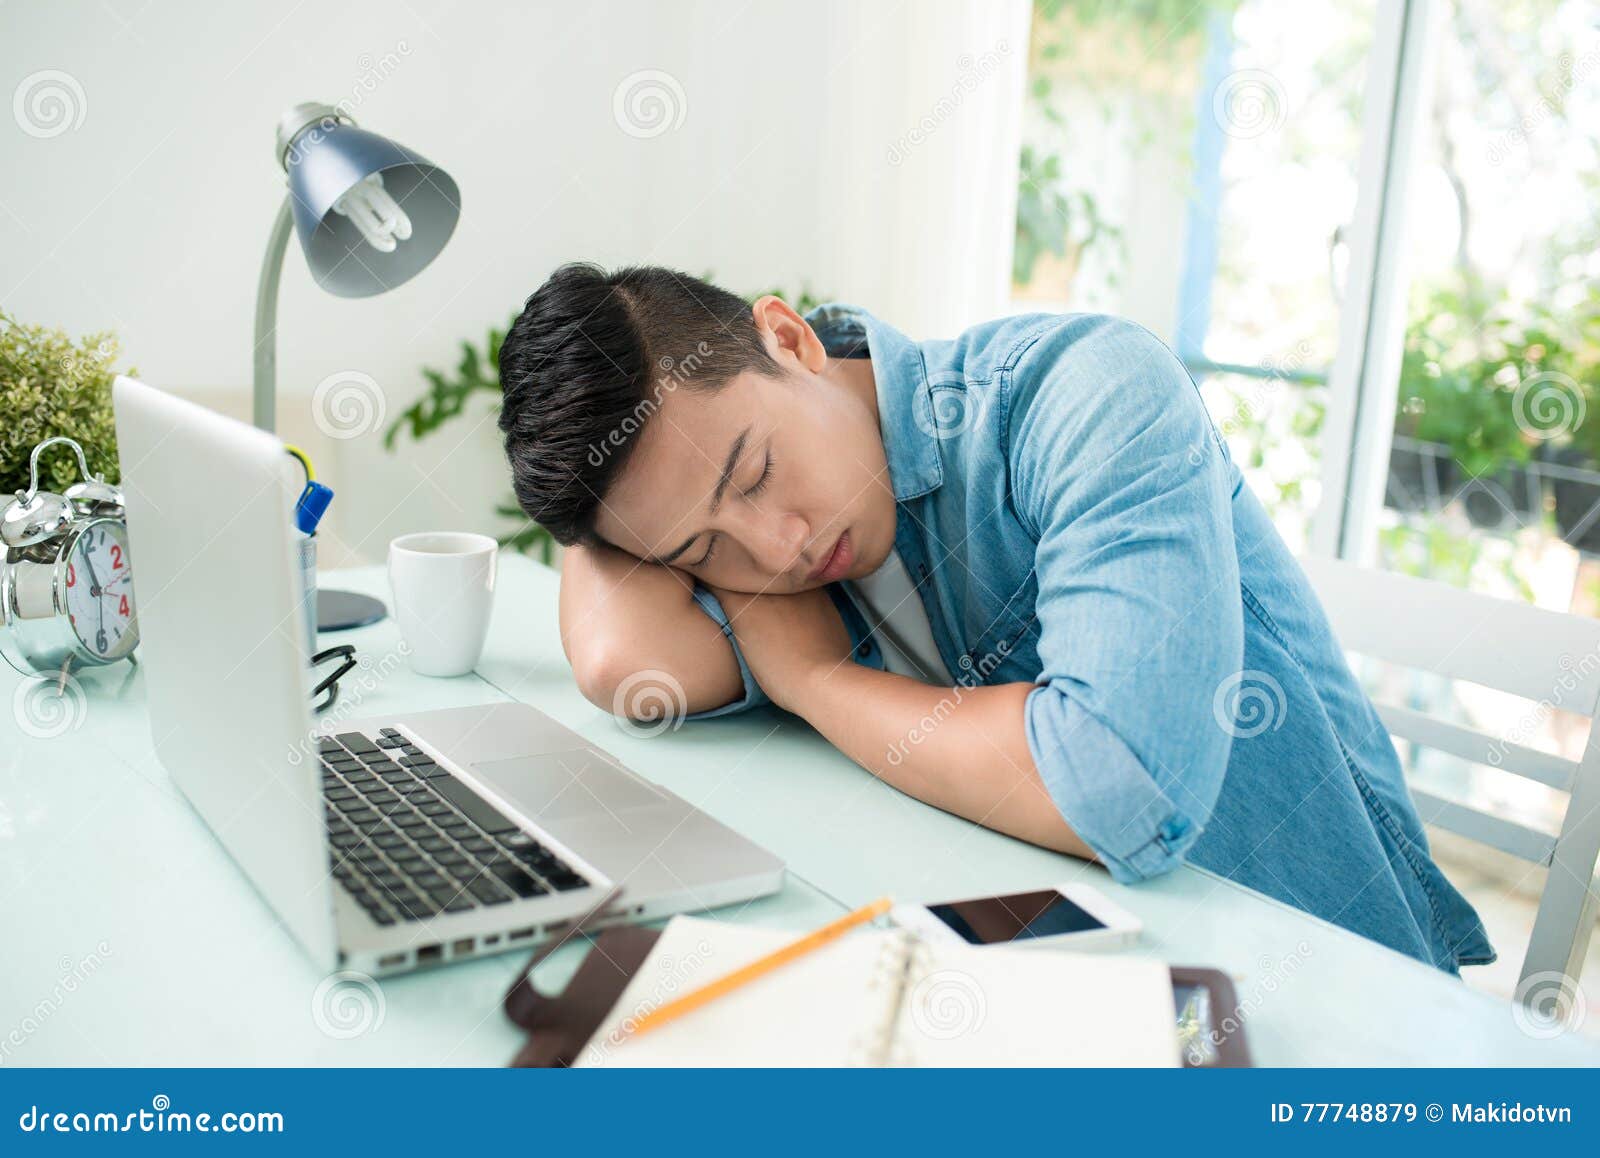 Stressed Overworked Man Studying Sleepy On Desk Stock Image